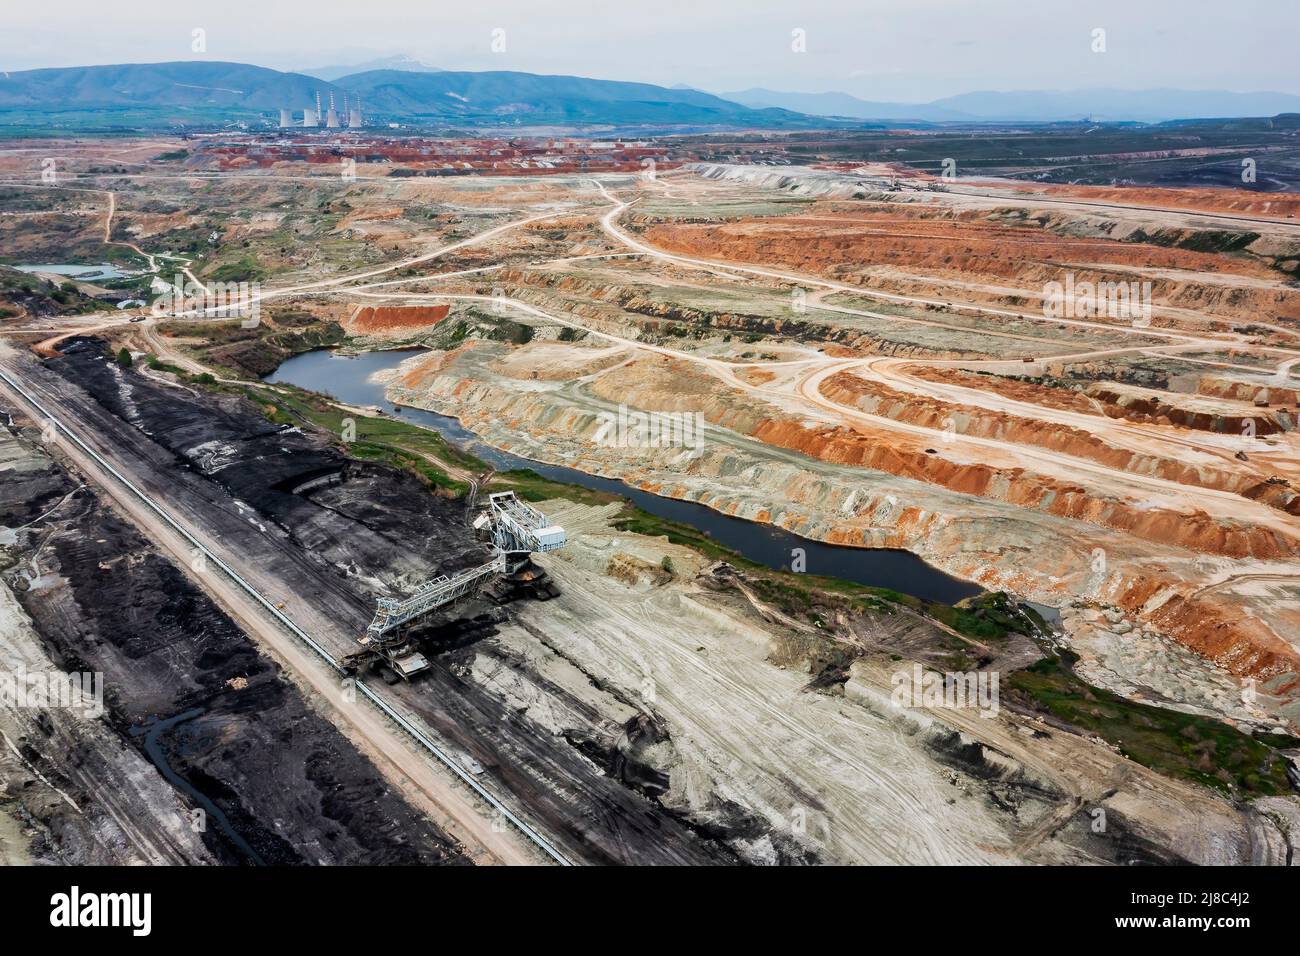 View into the opencast lignite mine in the lignite mining area near Ptolemaida, Greece. Aerial View Stock Photo